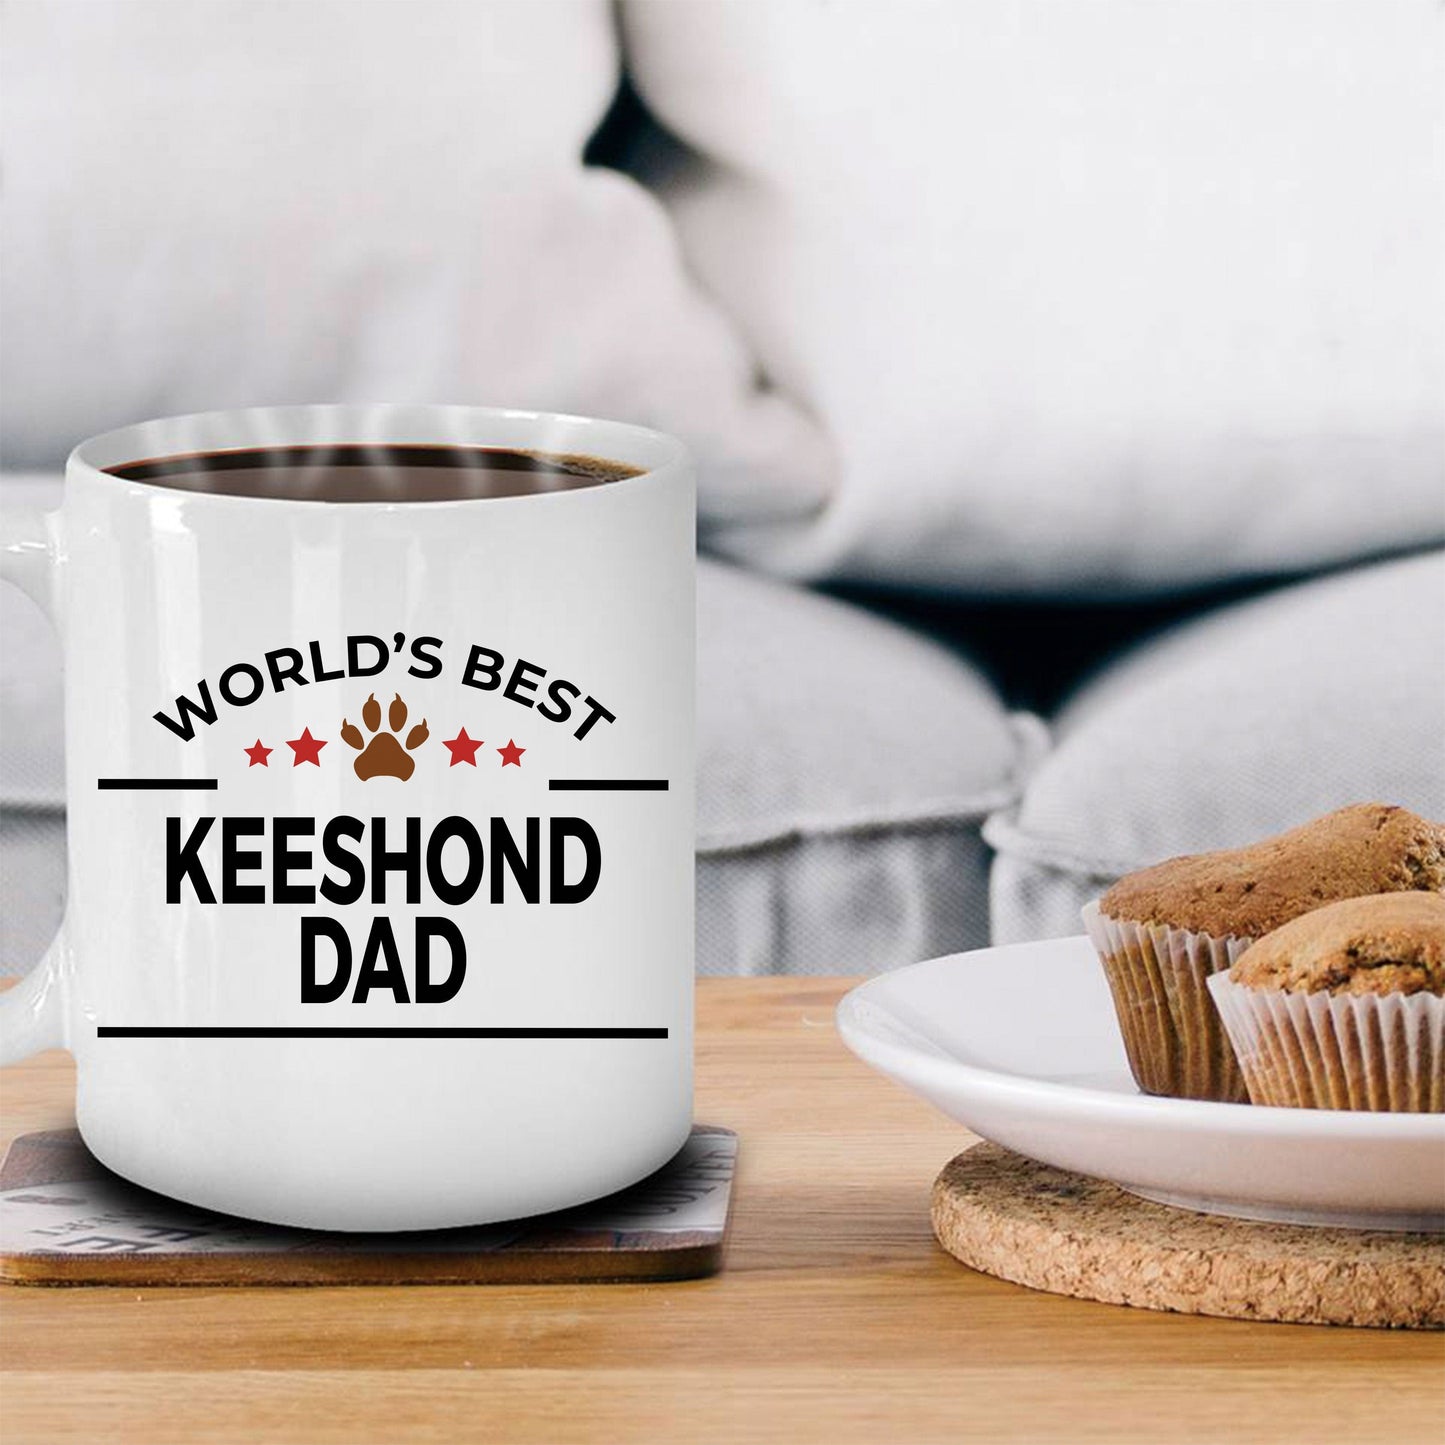 Keeshond Dog Lover Gift World's Best Dad Birthday Father's Day White Ceramic Coffee Mug